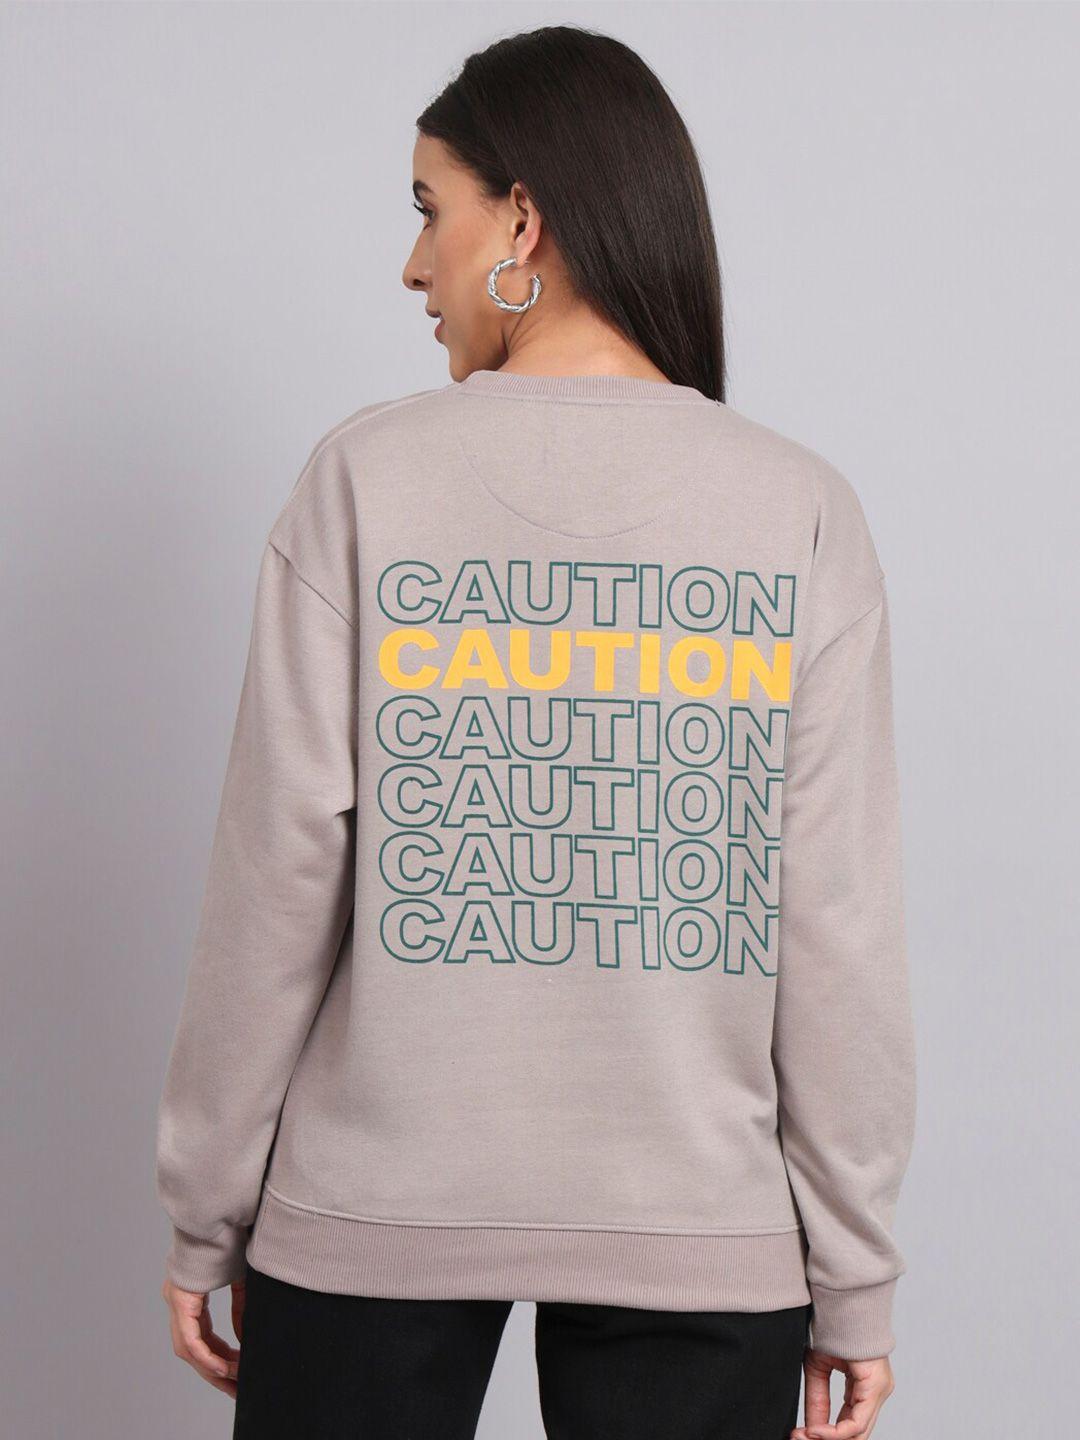 obaan typography printed cotton sweatshirt